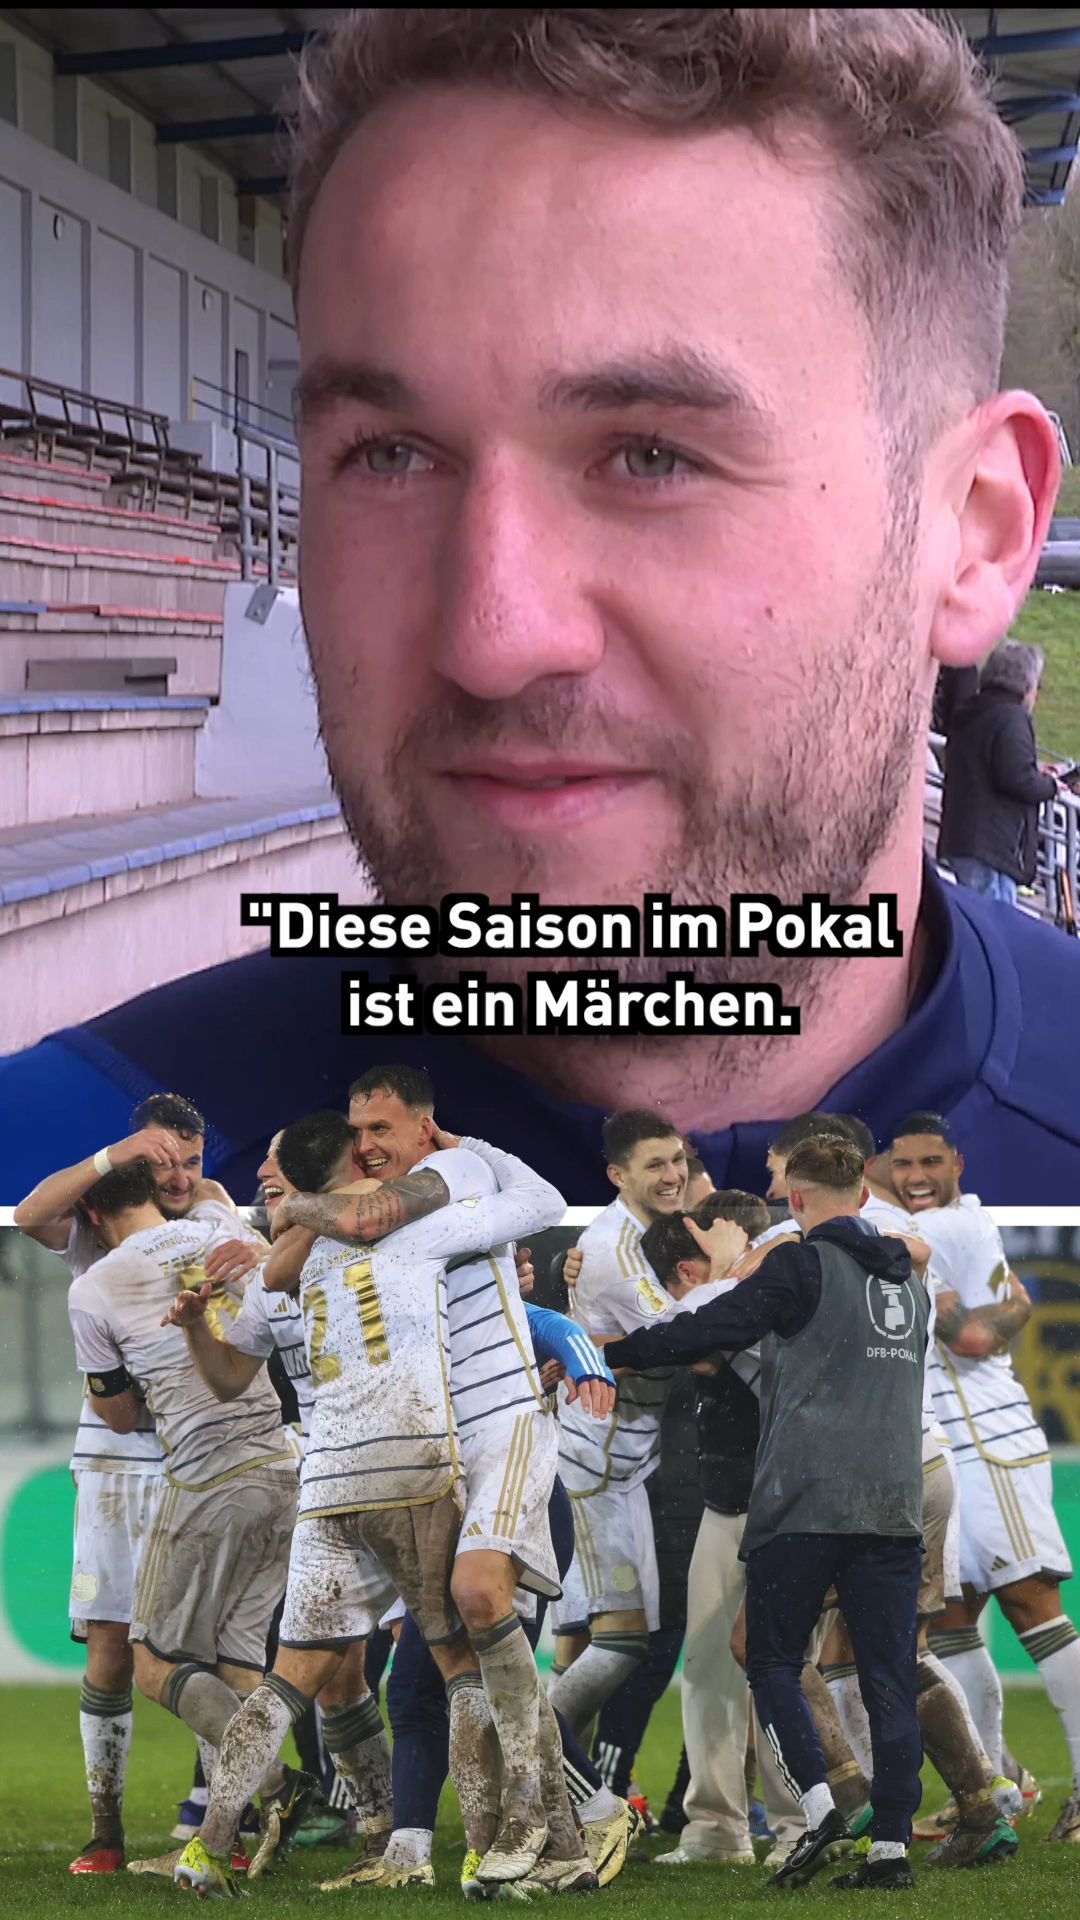 Saarbrücken will Pokal-